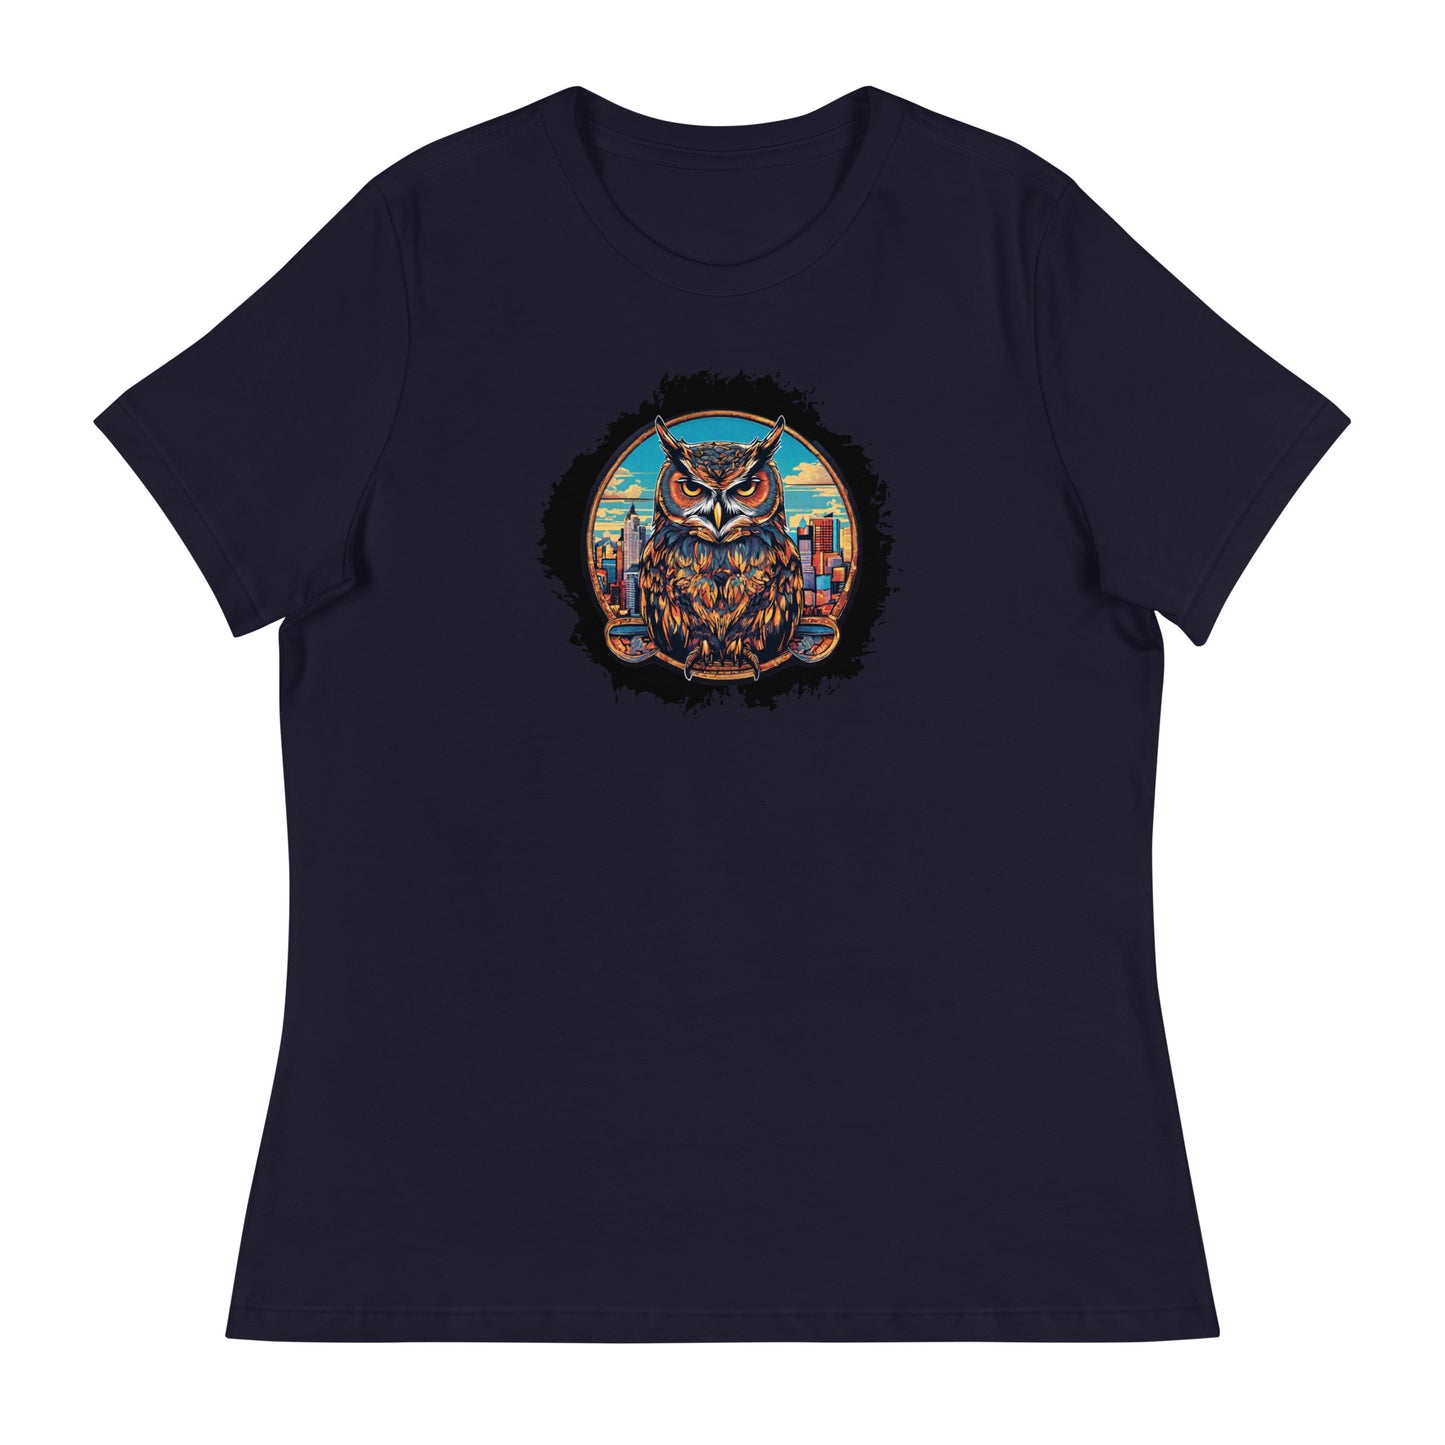 Owl in the City Emblem Women's T-Shirt Navy